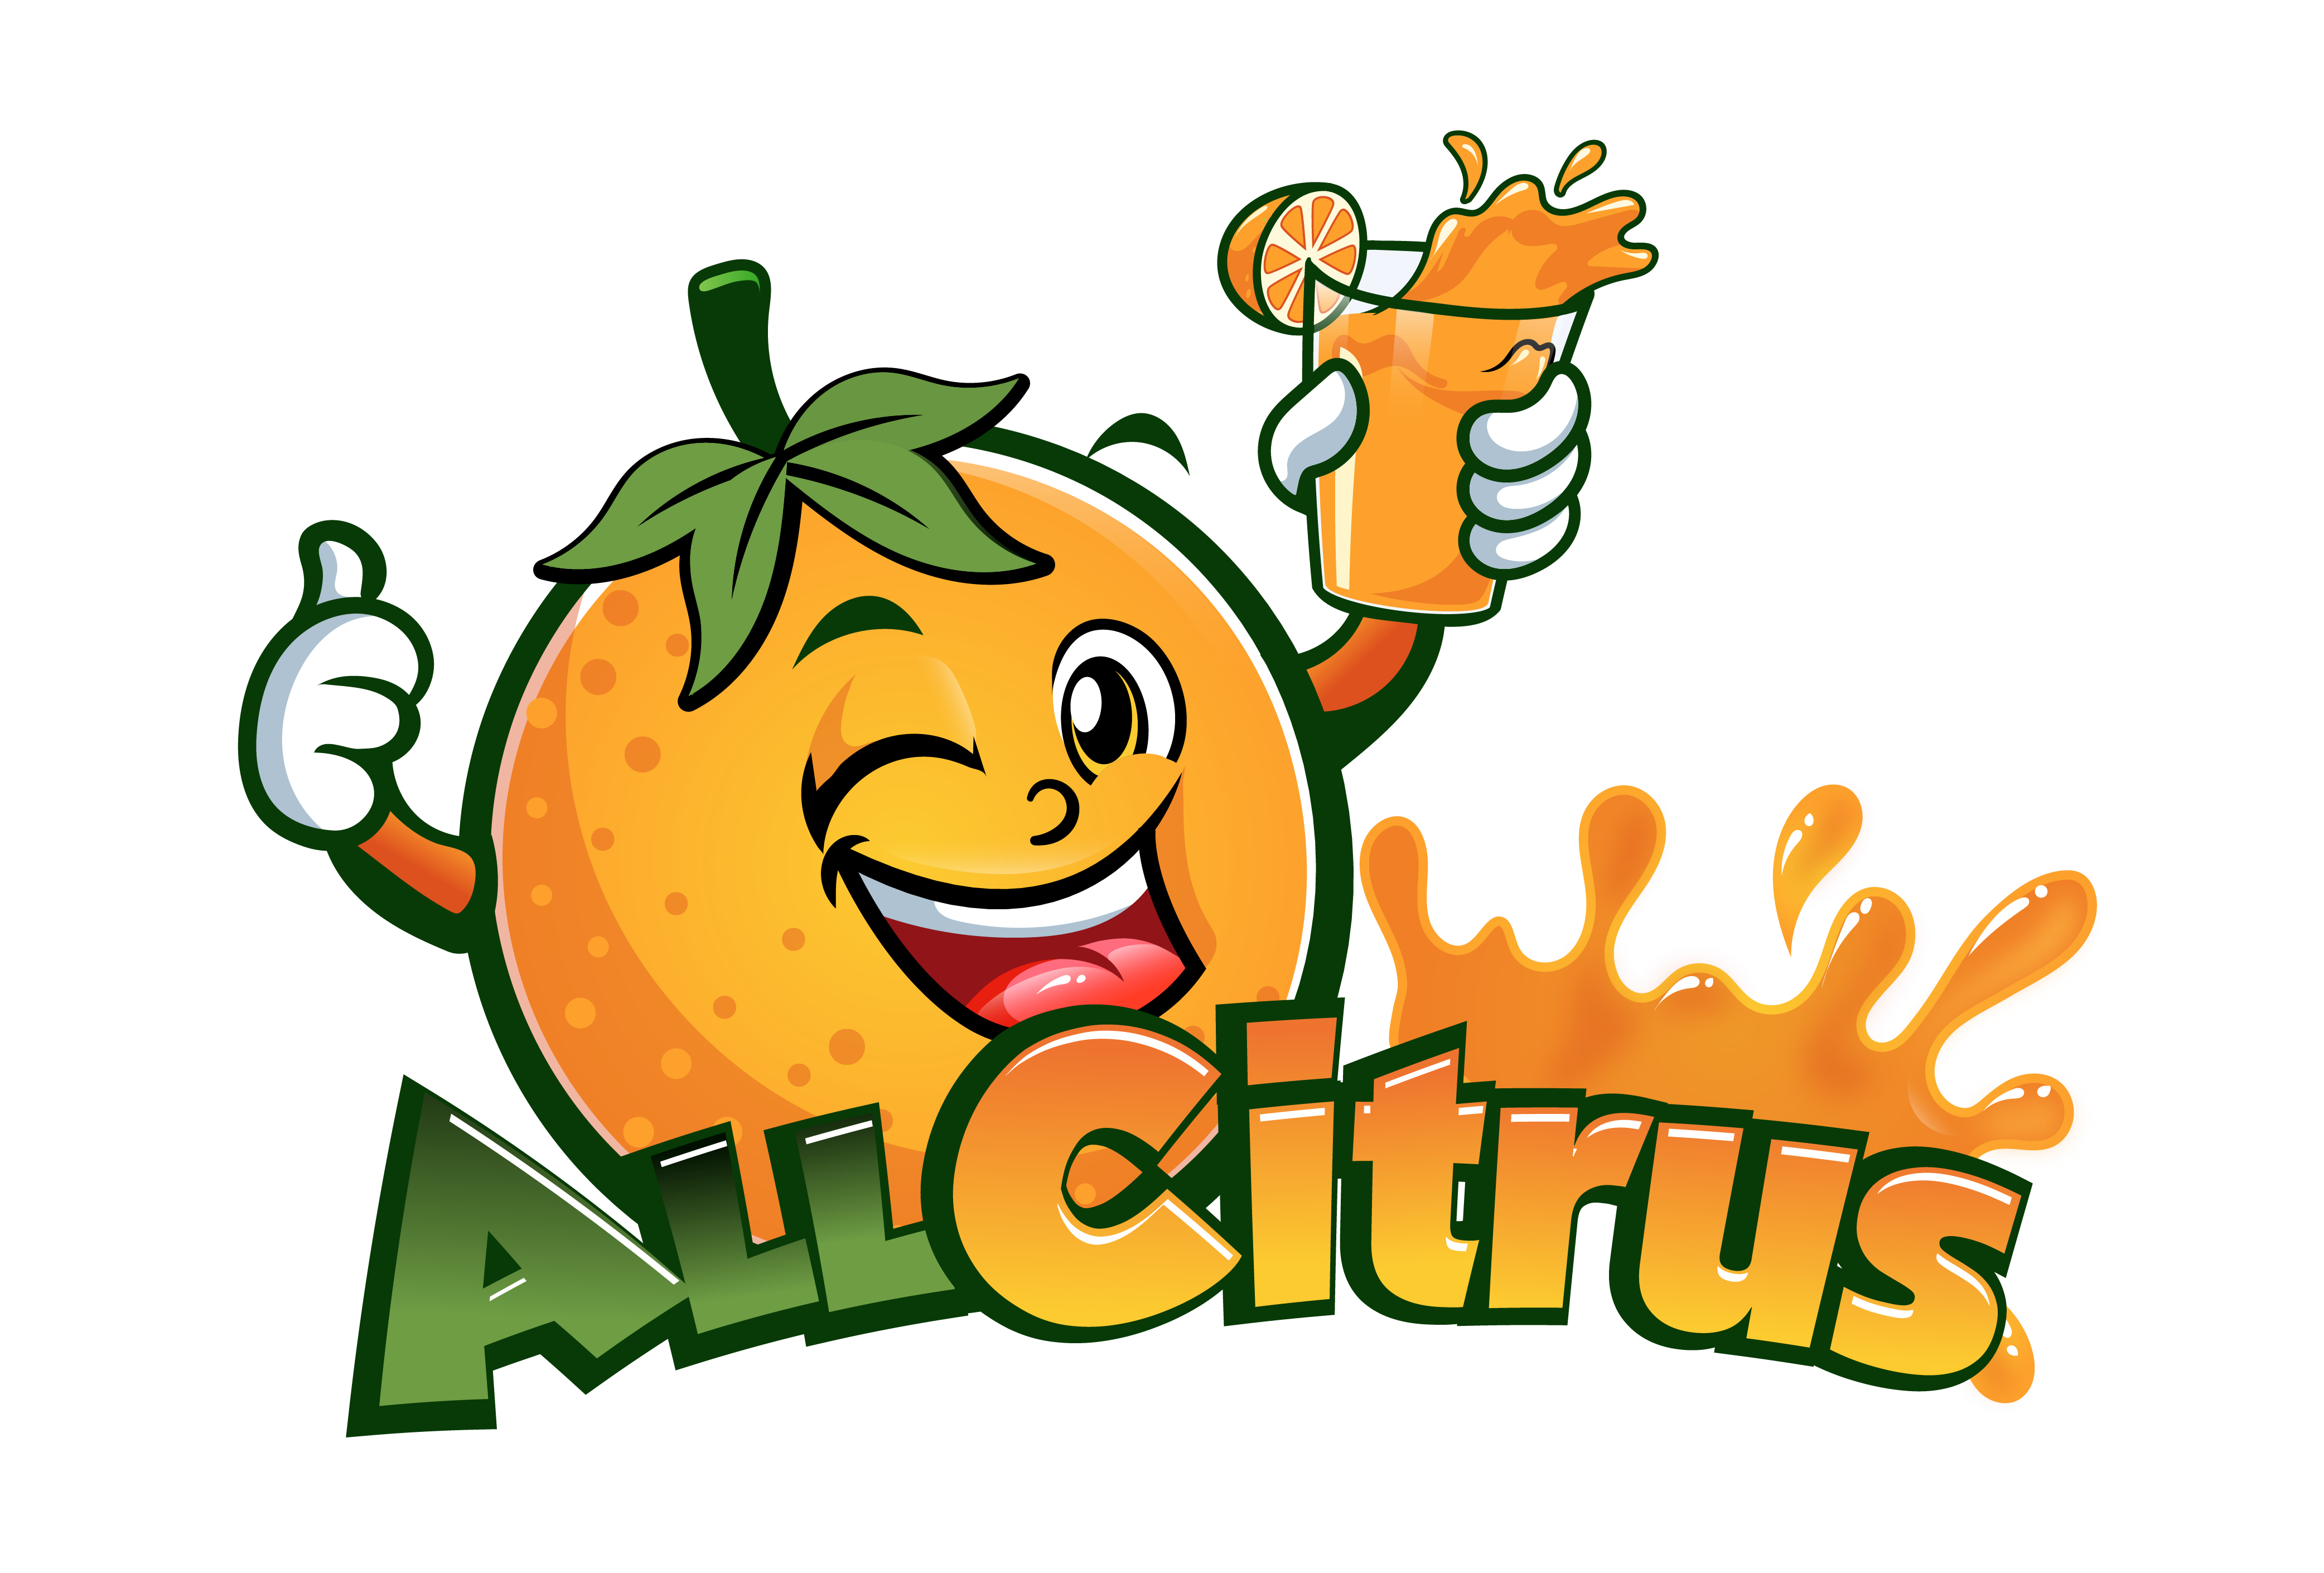 all citrus logo